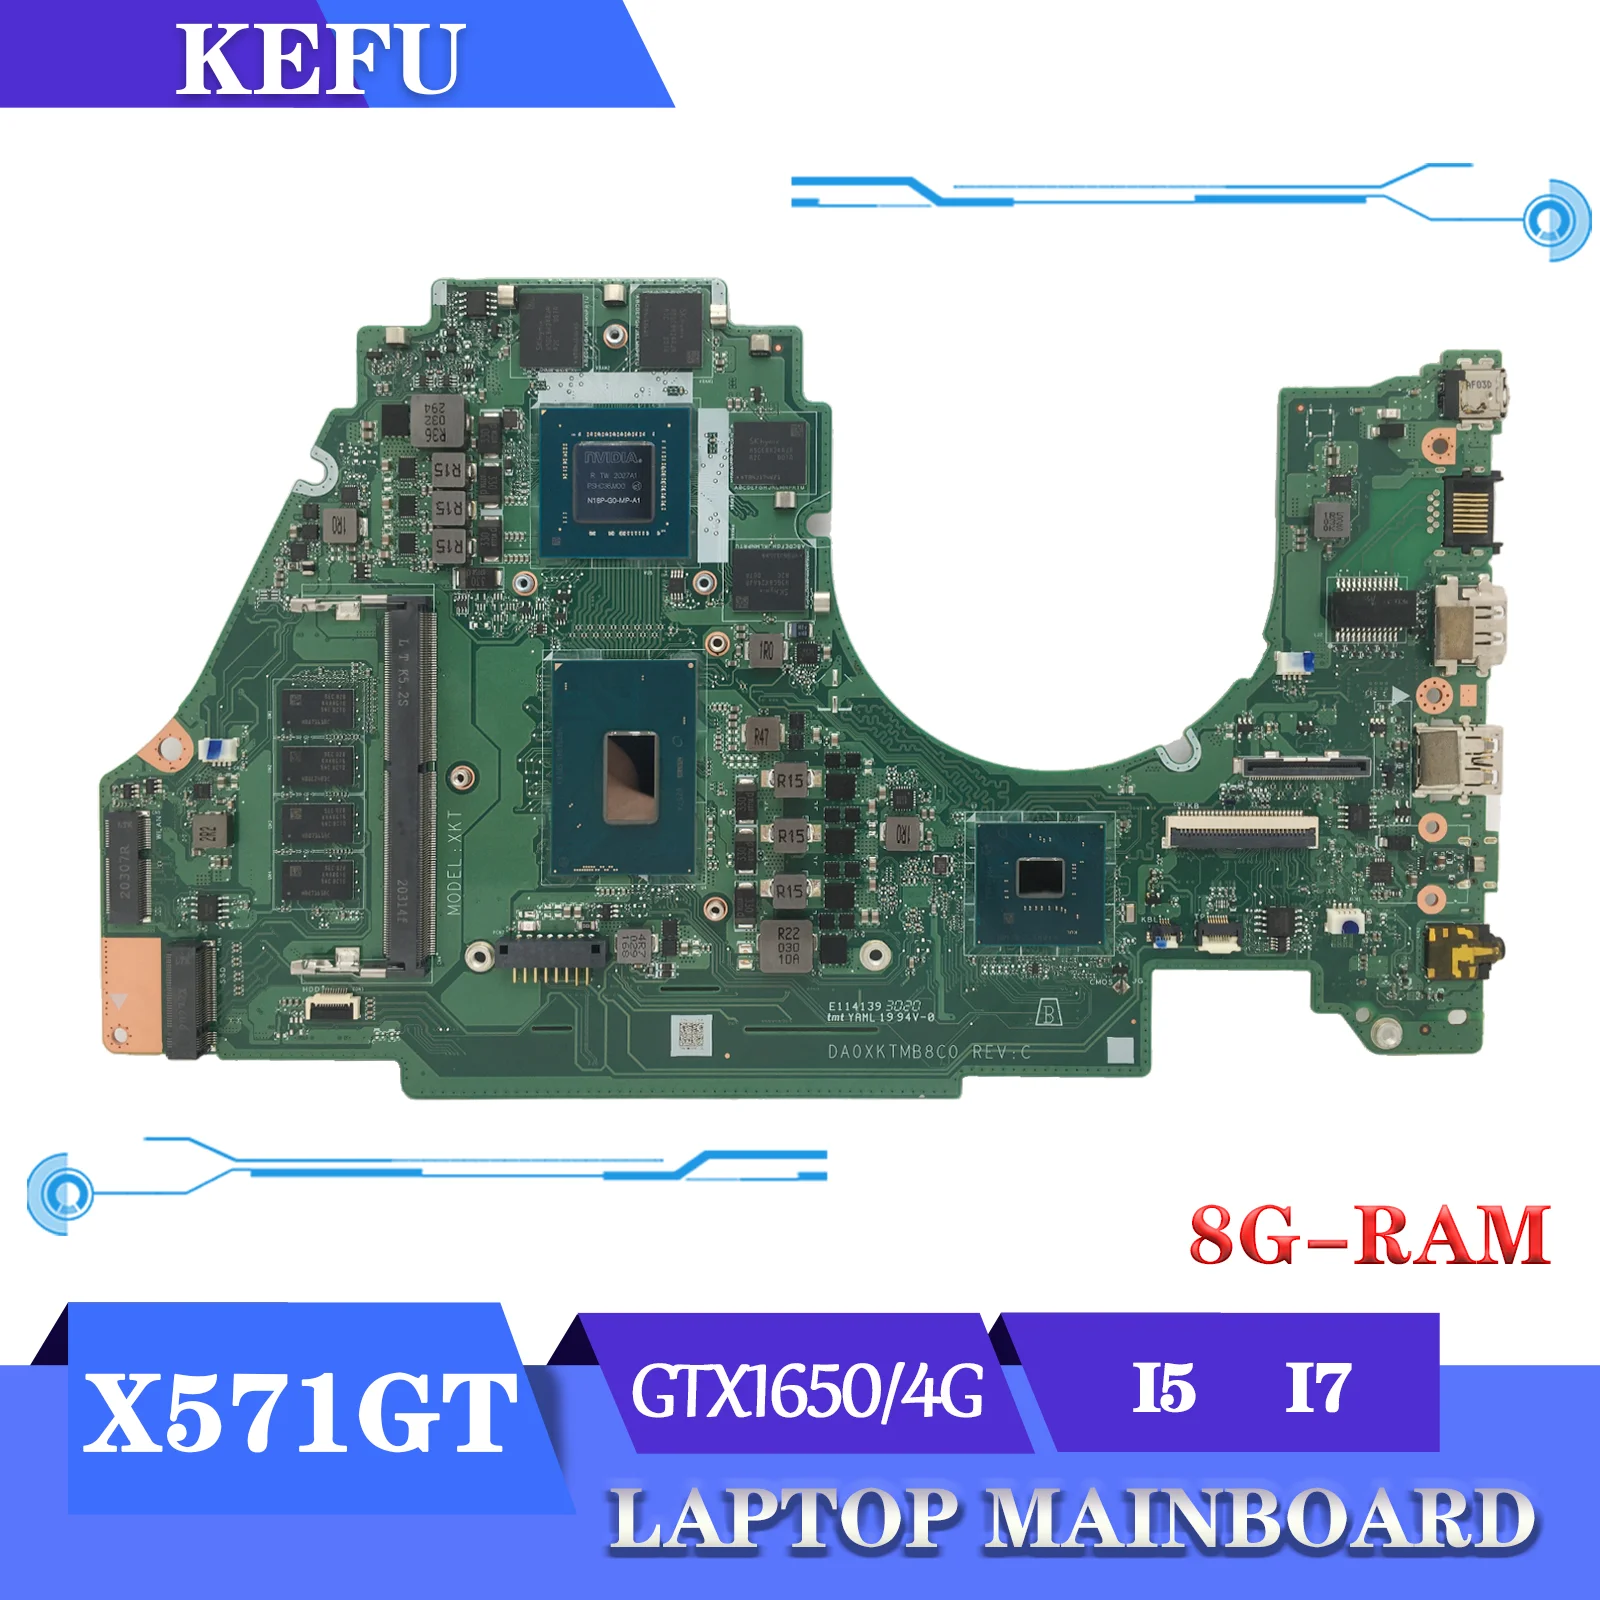 

KEFU Motherboard X571GT For ASUS VX60GT X571GD F571G A571G K571G YX571G R571G VX60G Laptop Mainboard I5 I7 8TH/9TH GTX1650/4G